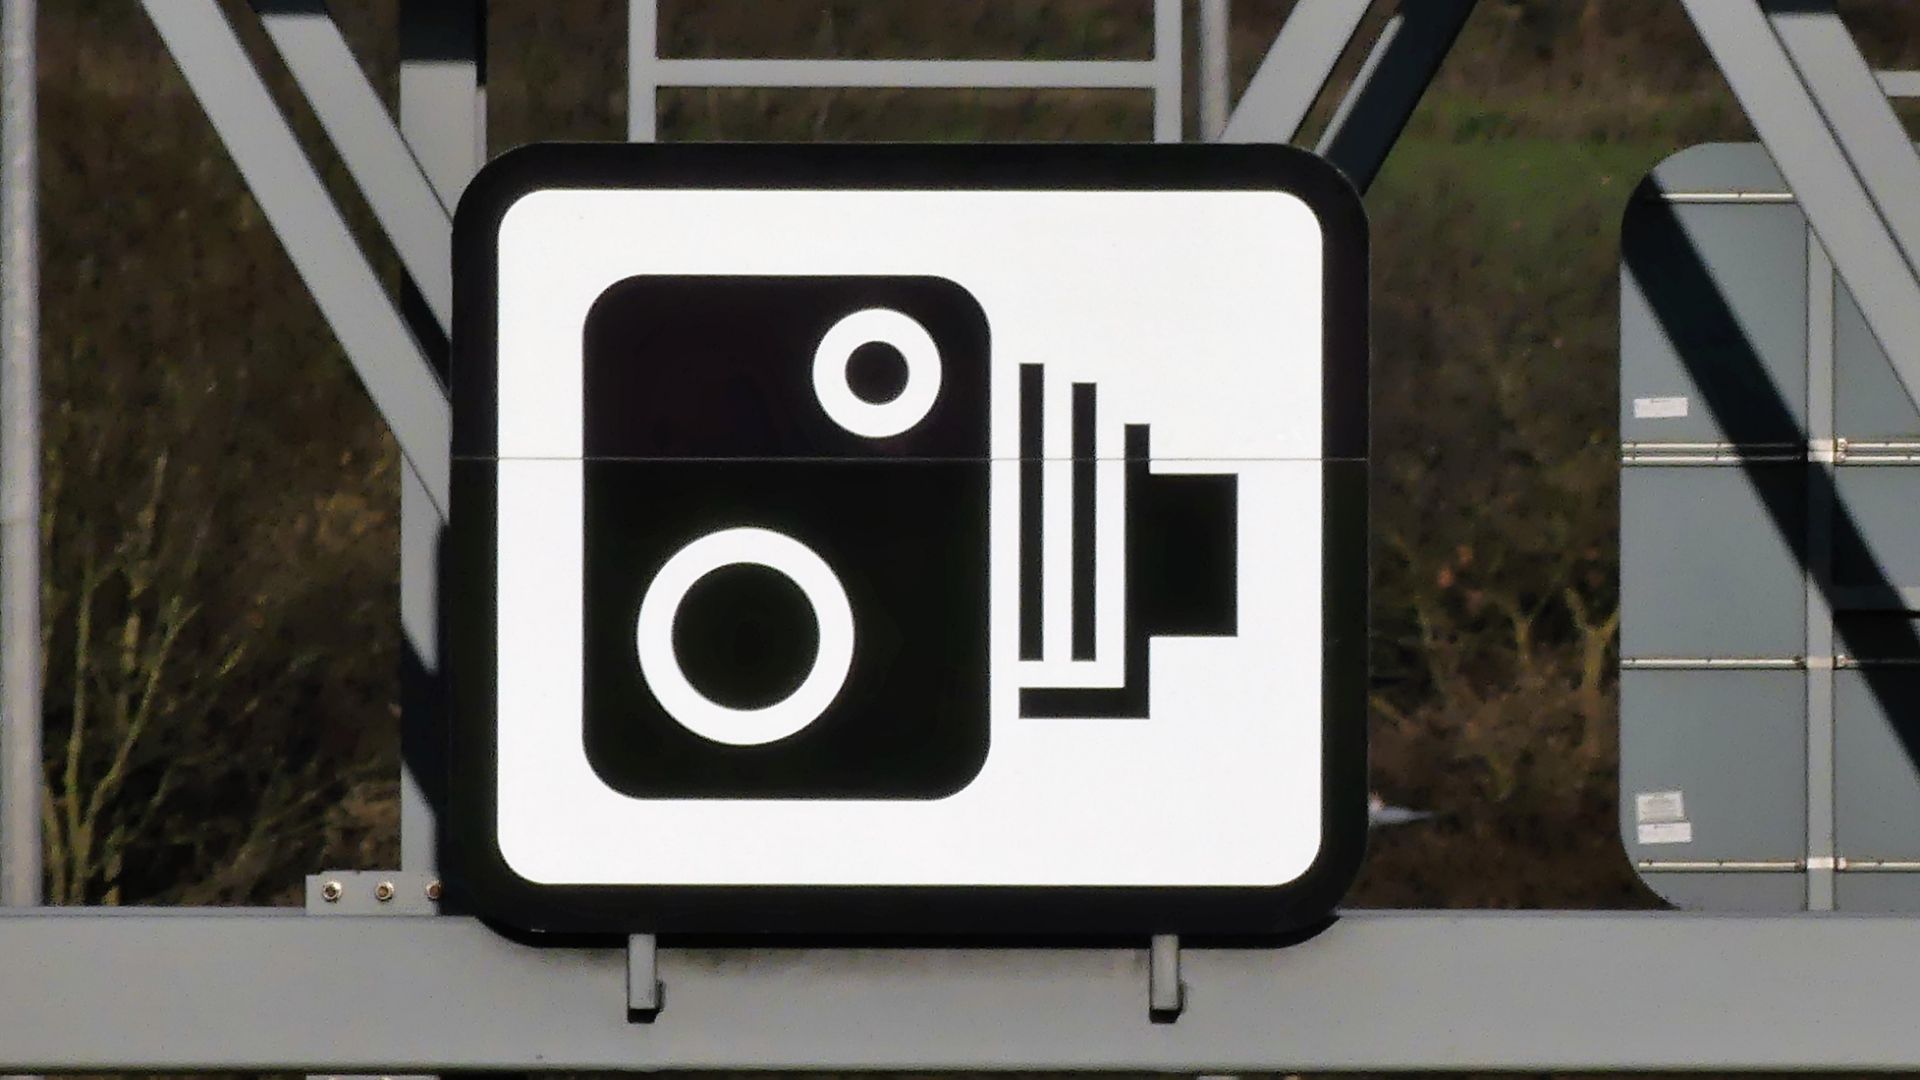 smart motorway speed cameras one minute grace period